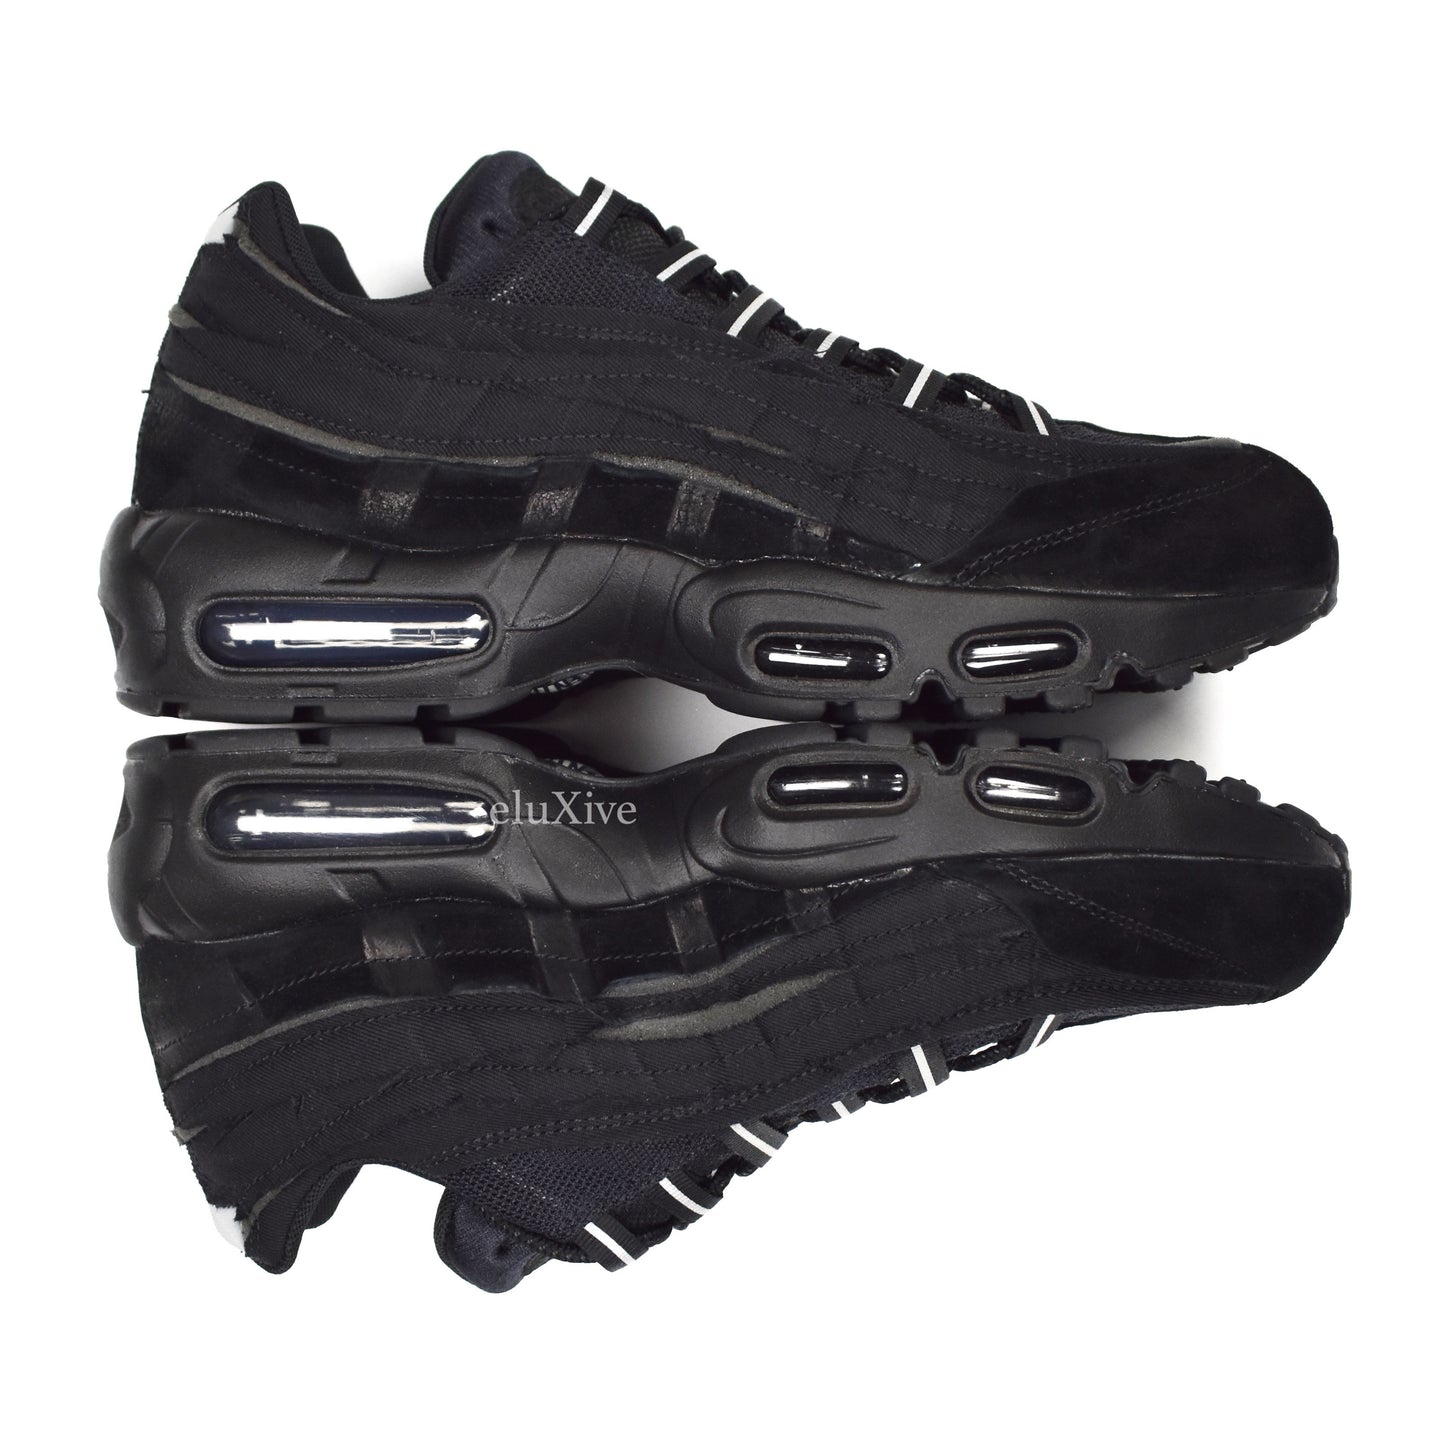 Comme des Garcons x Nike - Air Max 95 CDG (Black)